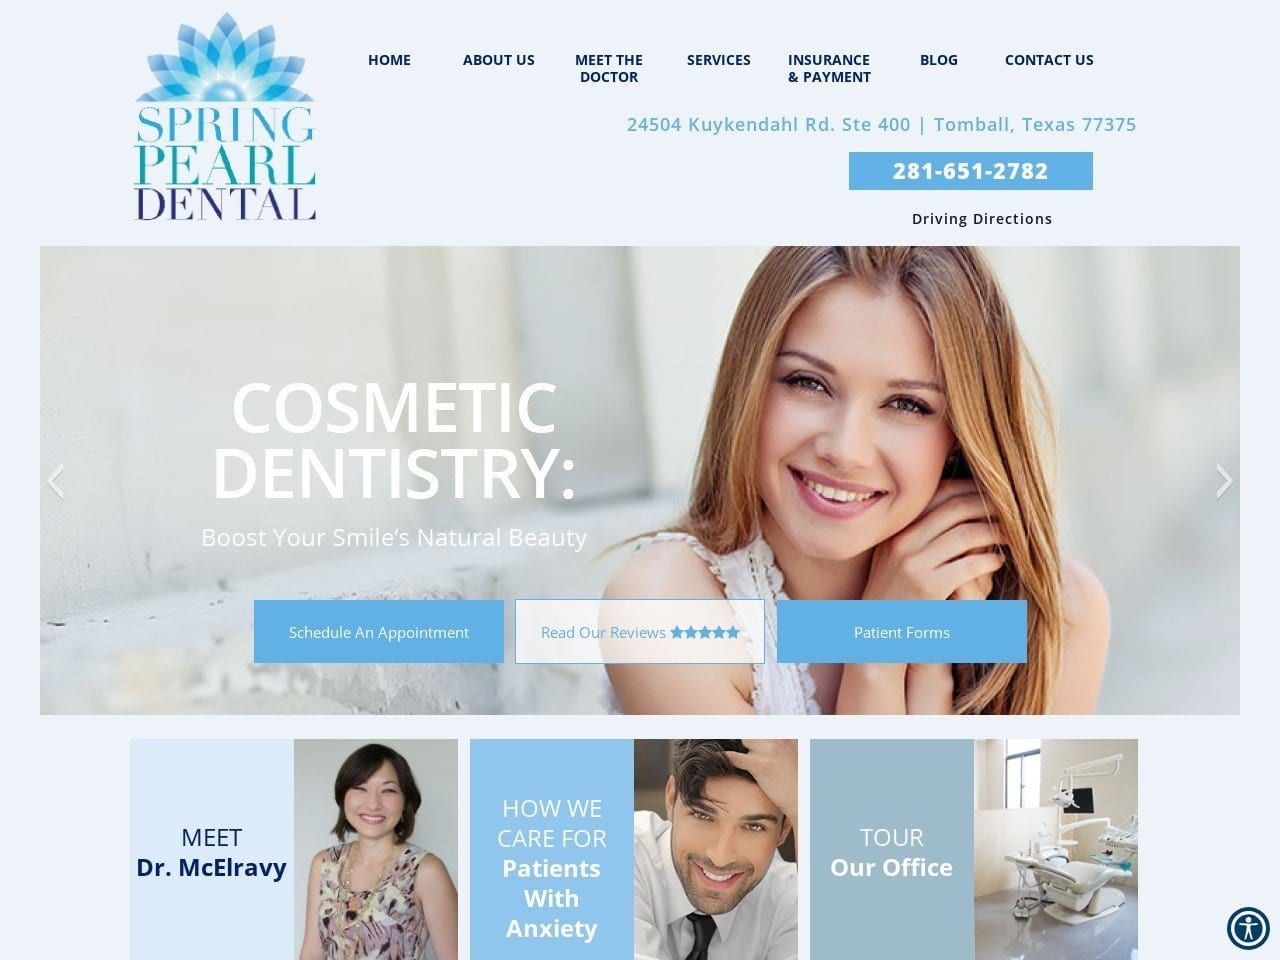 Spring Pearl Dental Website Screenshot from springpearldental.com